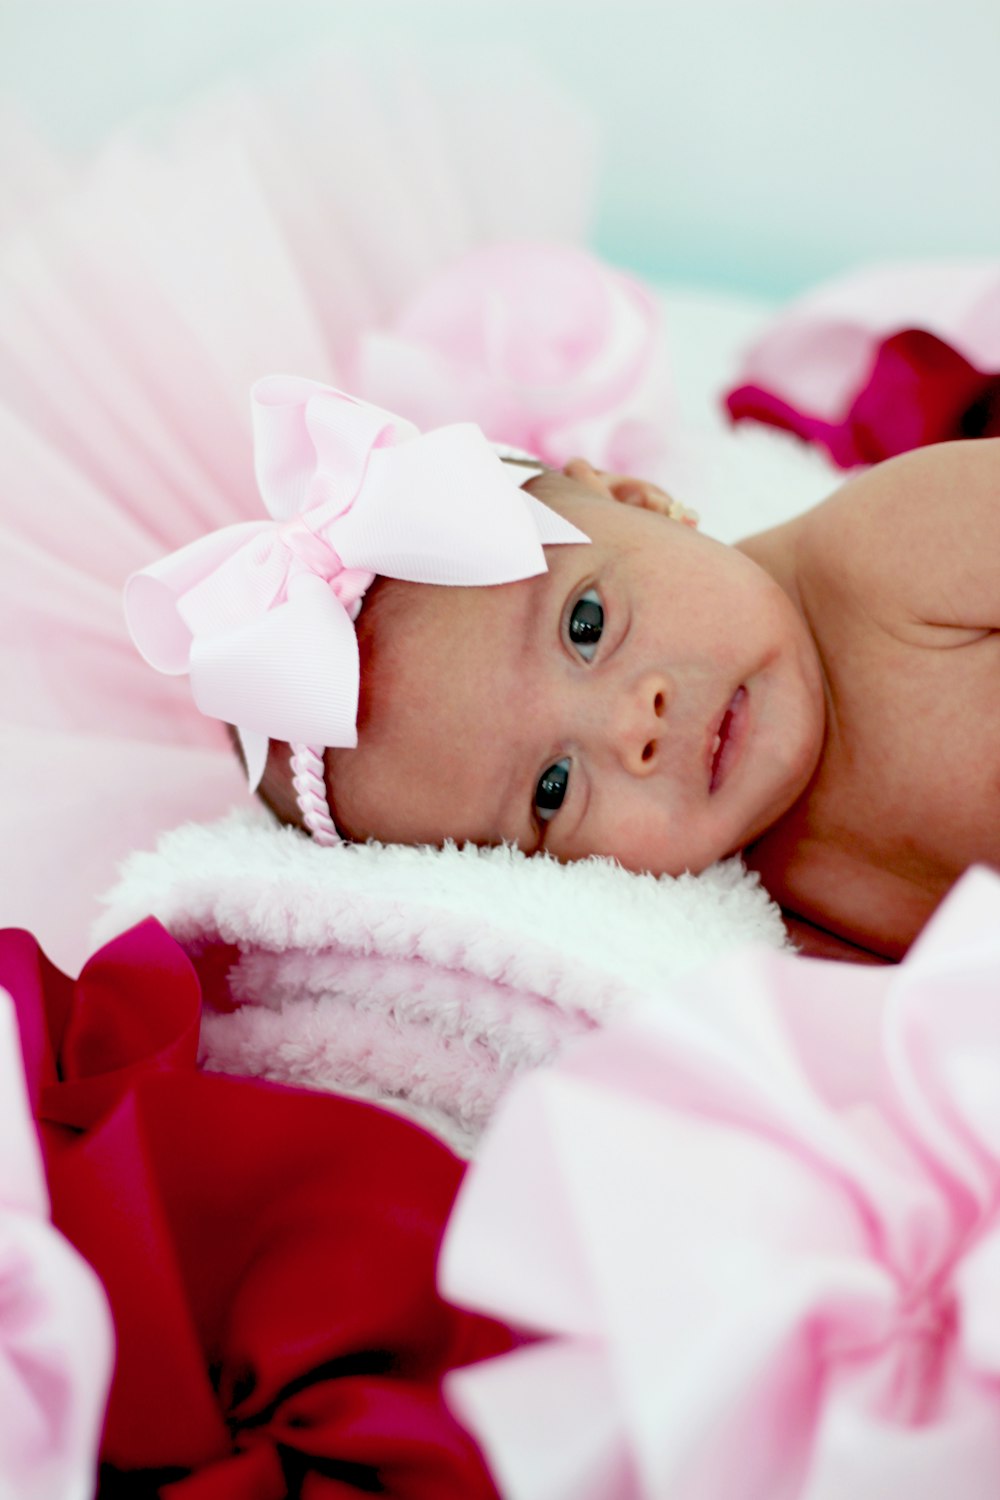 shallow focus photo of baby wearing pink headband